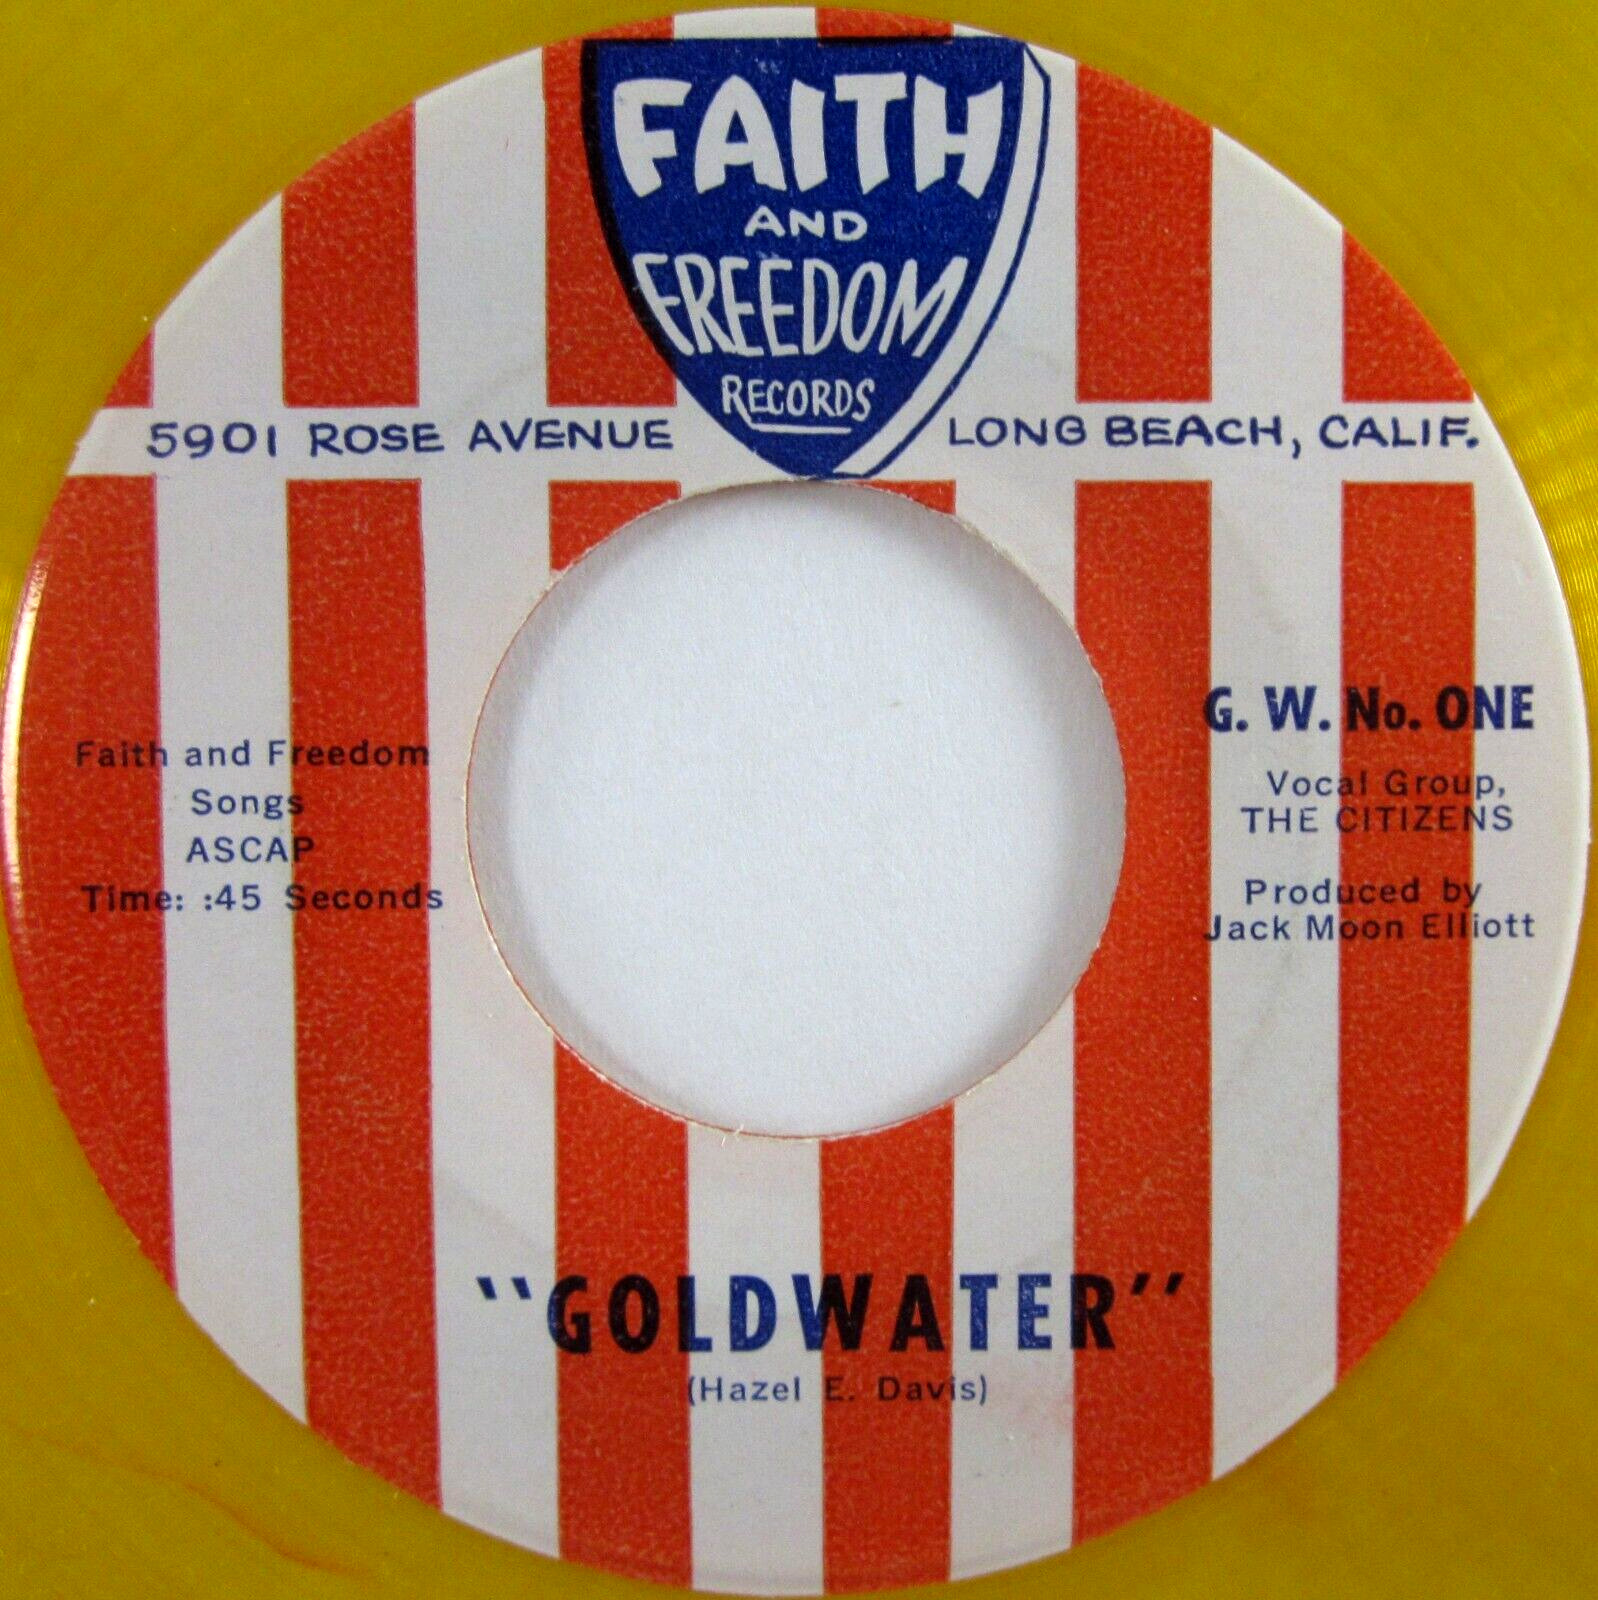 Barry Goldwater Campaign Record 45rpm Promo Hazel E. Davis by The Citizens 1964